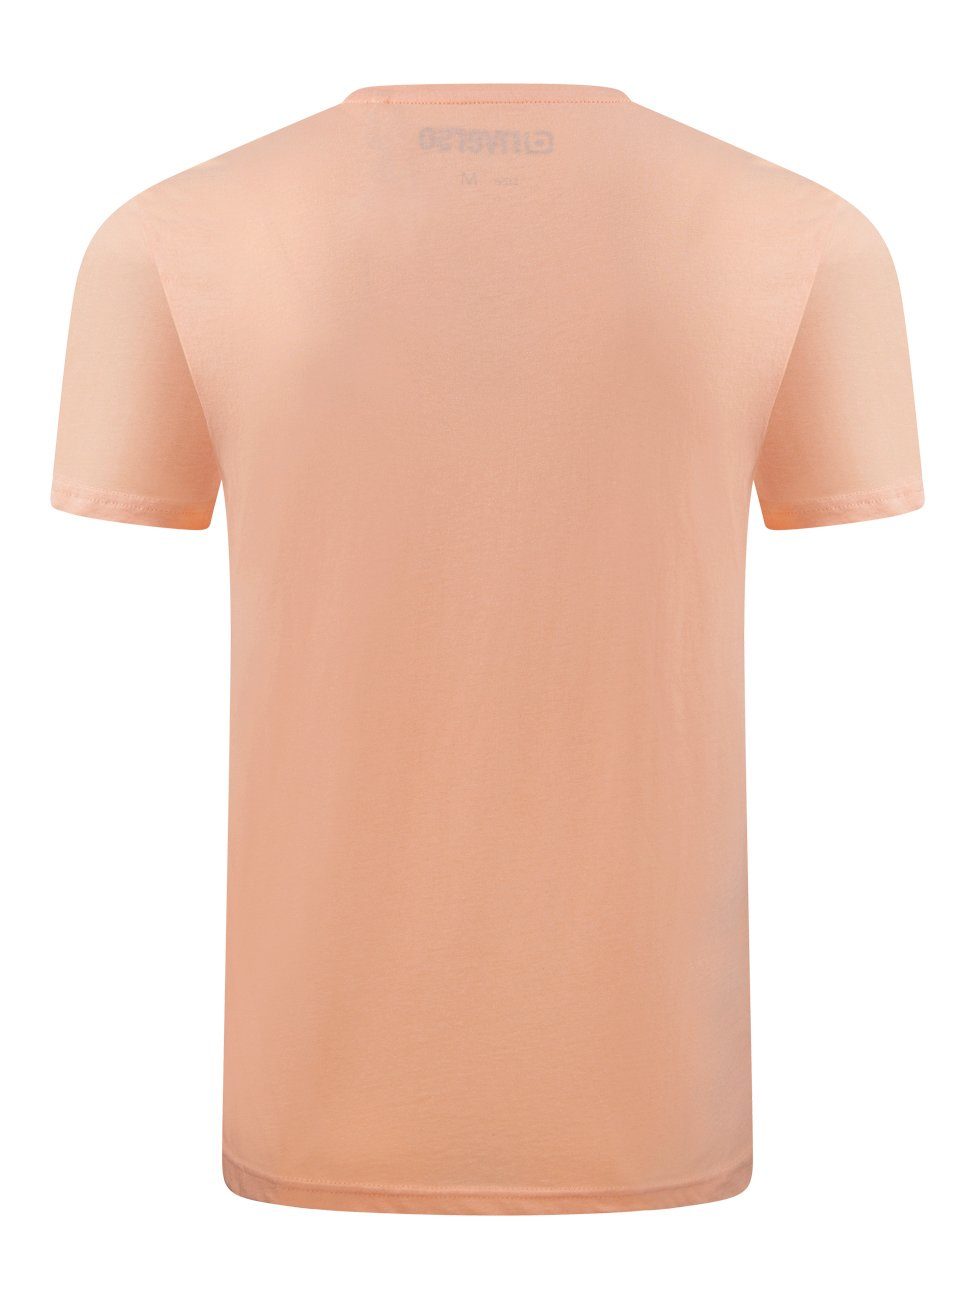 Bio T-Shirt Baumwolle Light Orange riverso Cotton 100% RIVAaron (11200) V-Neck (1-tlg) Organic